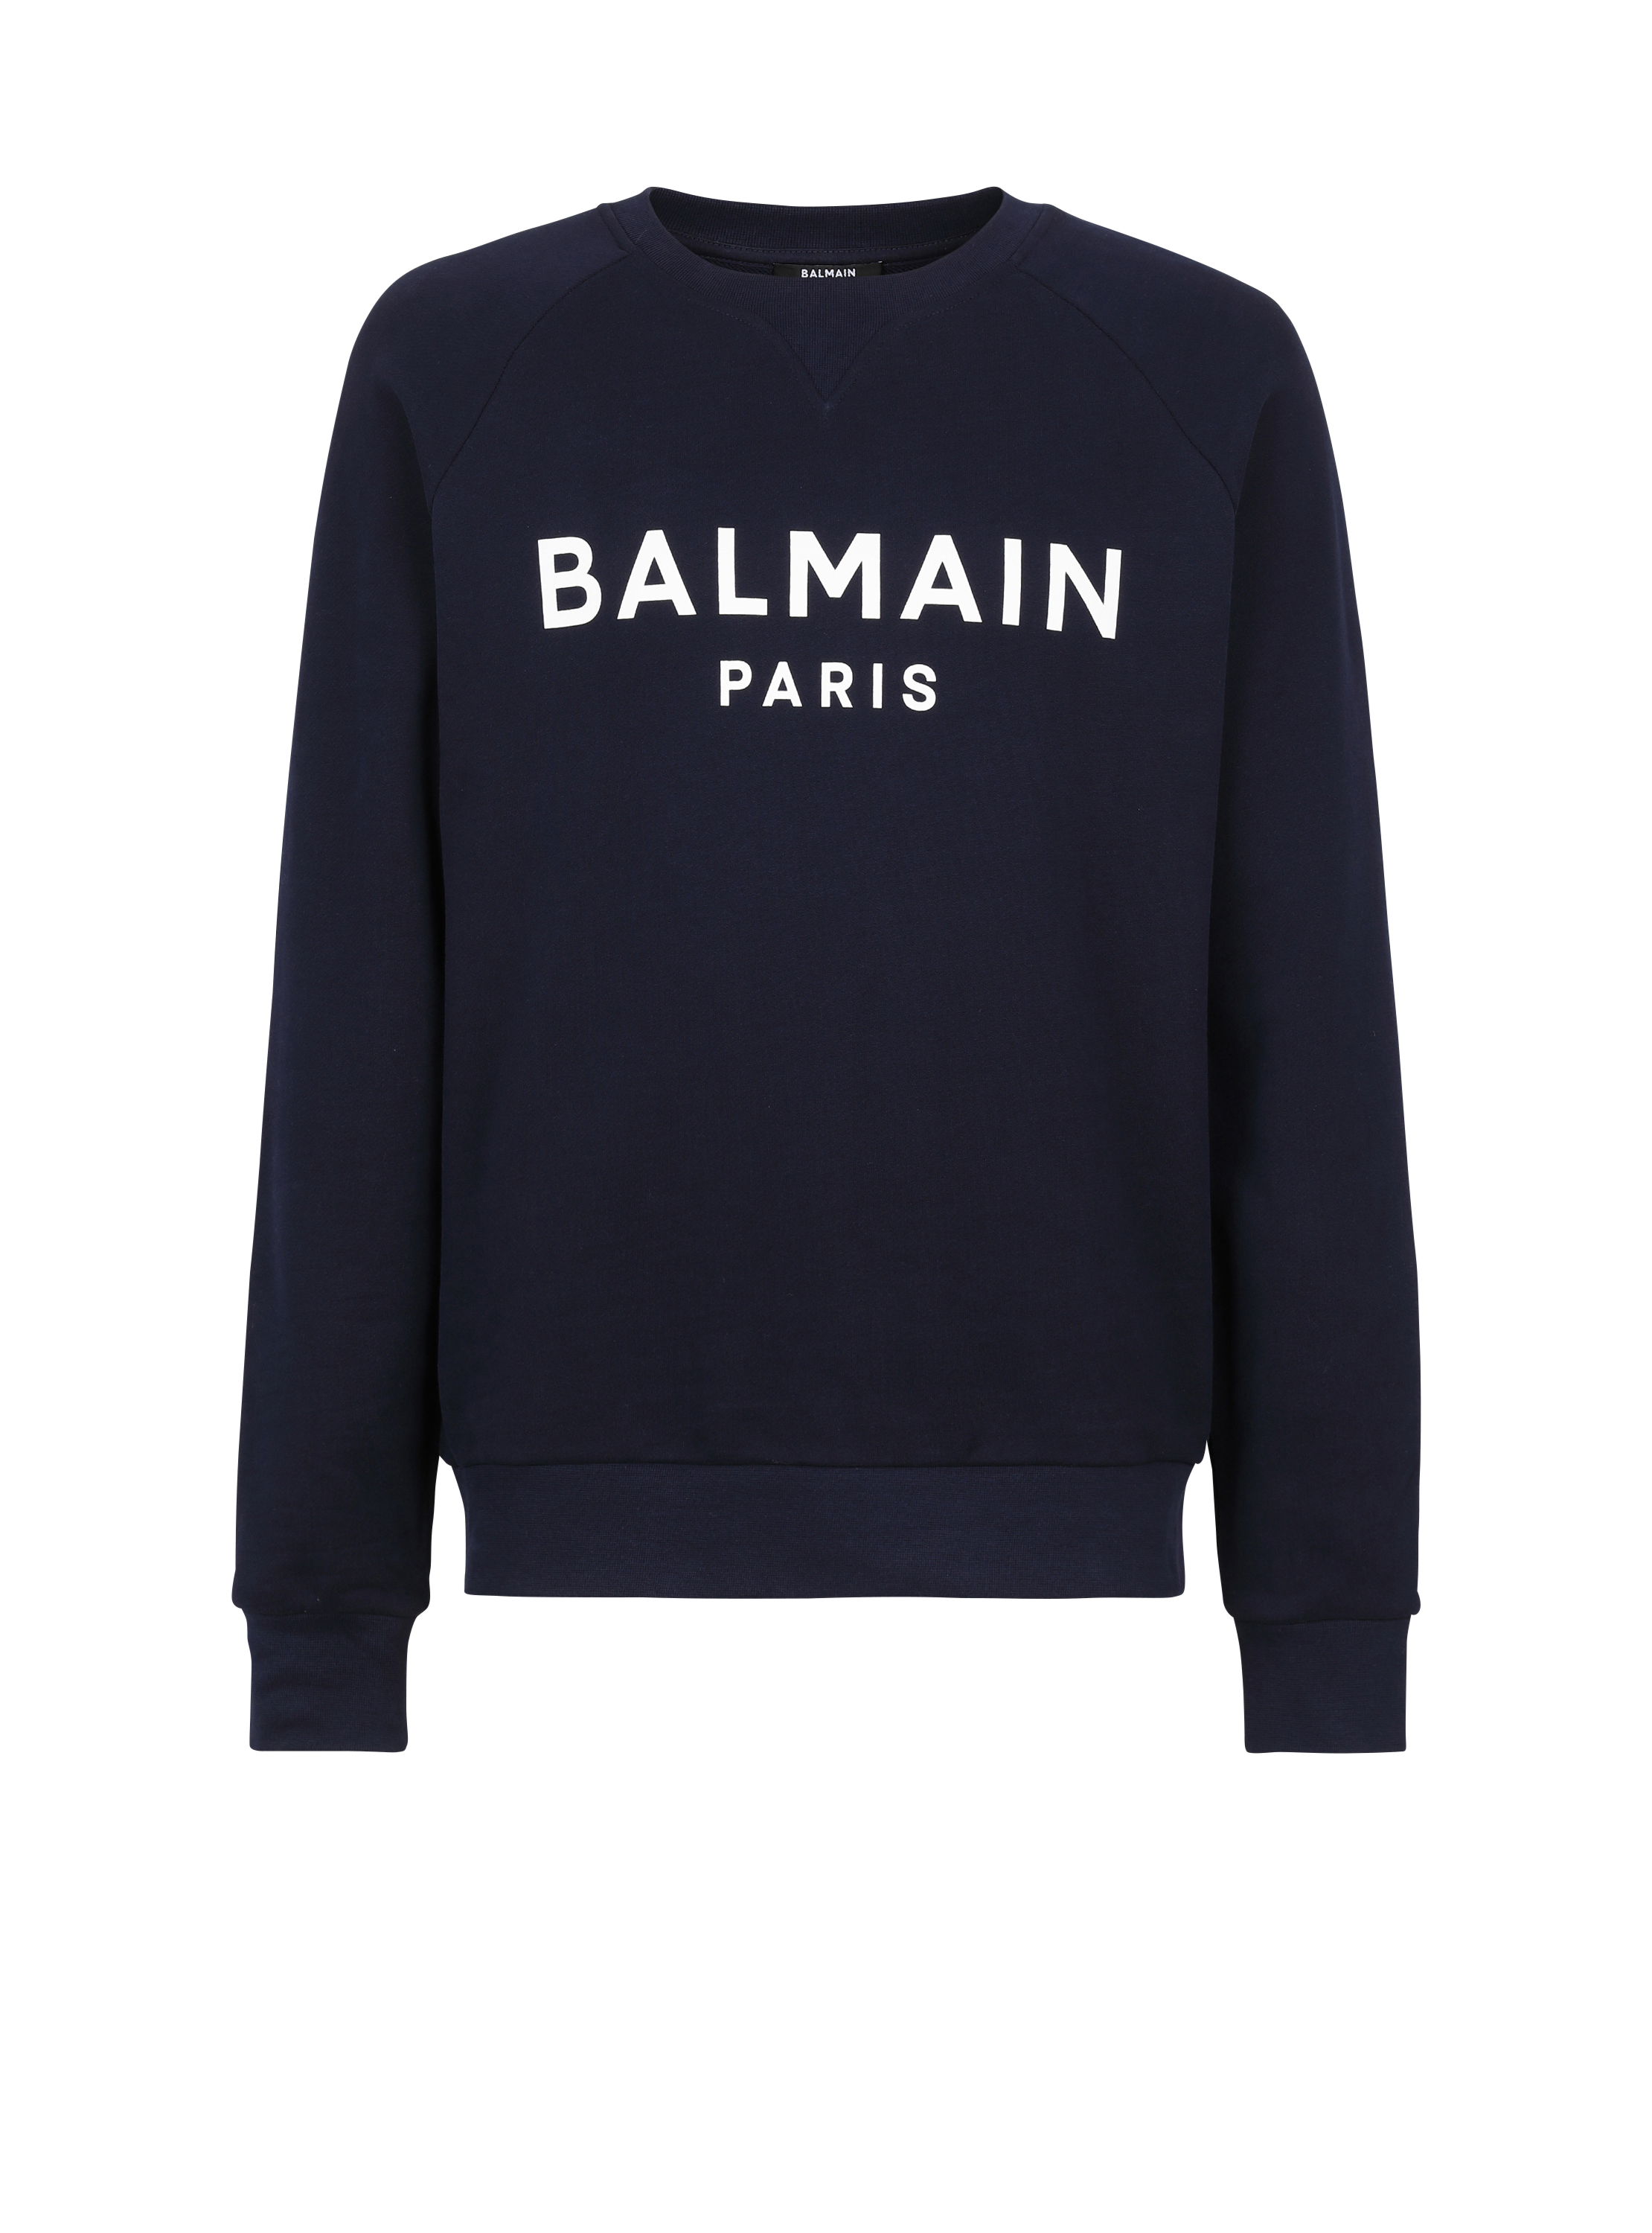 Sweatshirt aus Baumwolle mit geflocktem „Balmain Paris“-Logo, marineblau, hi-res